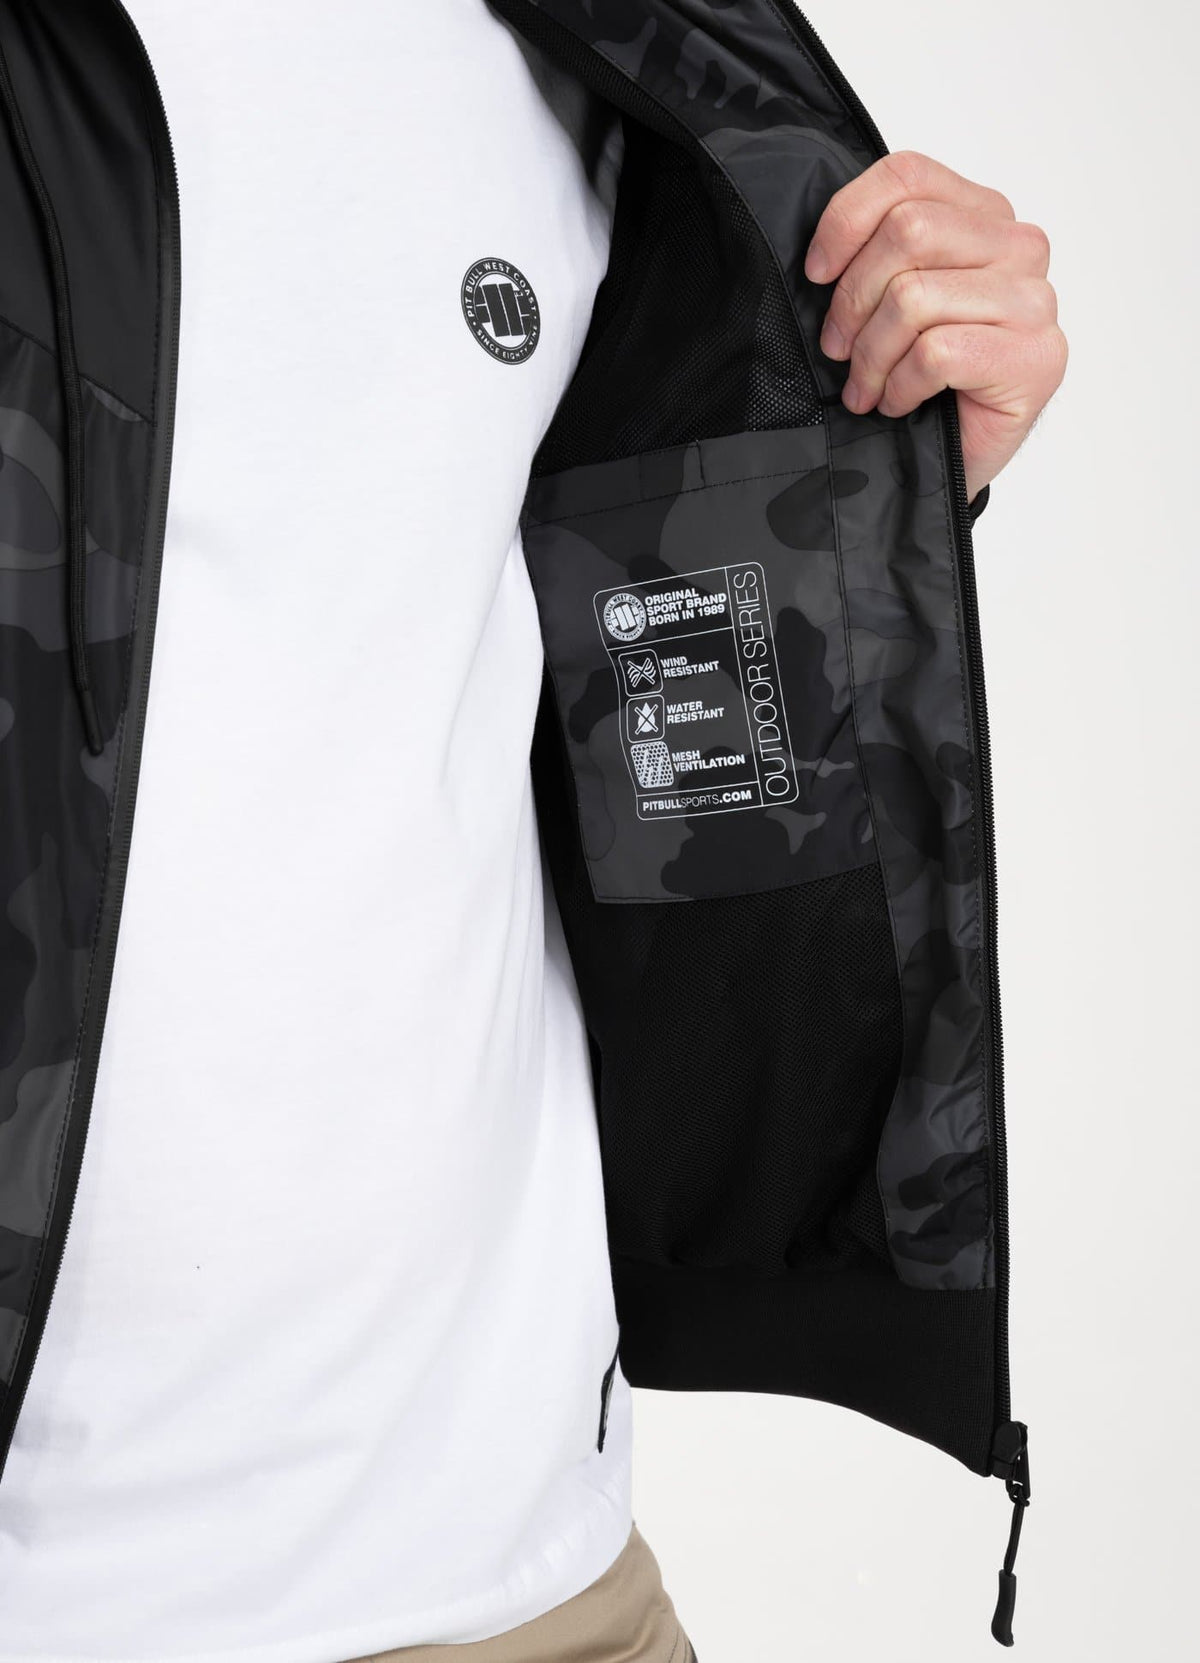 Jacket DIVISION Camo Black - Pitbull West Coast International Store 